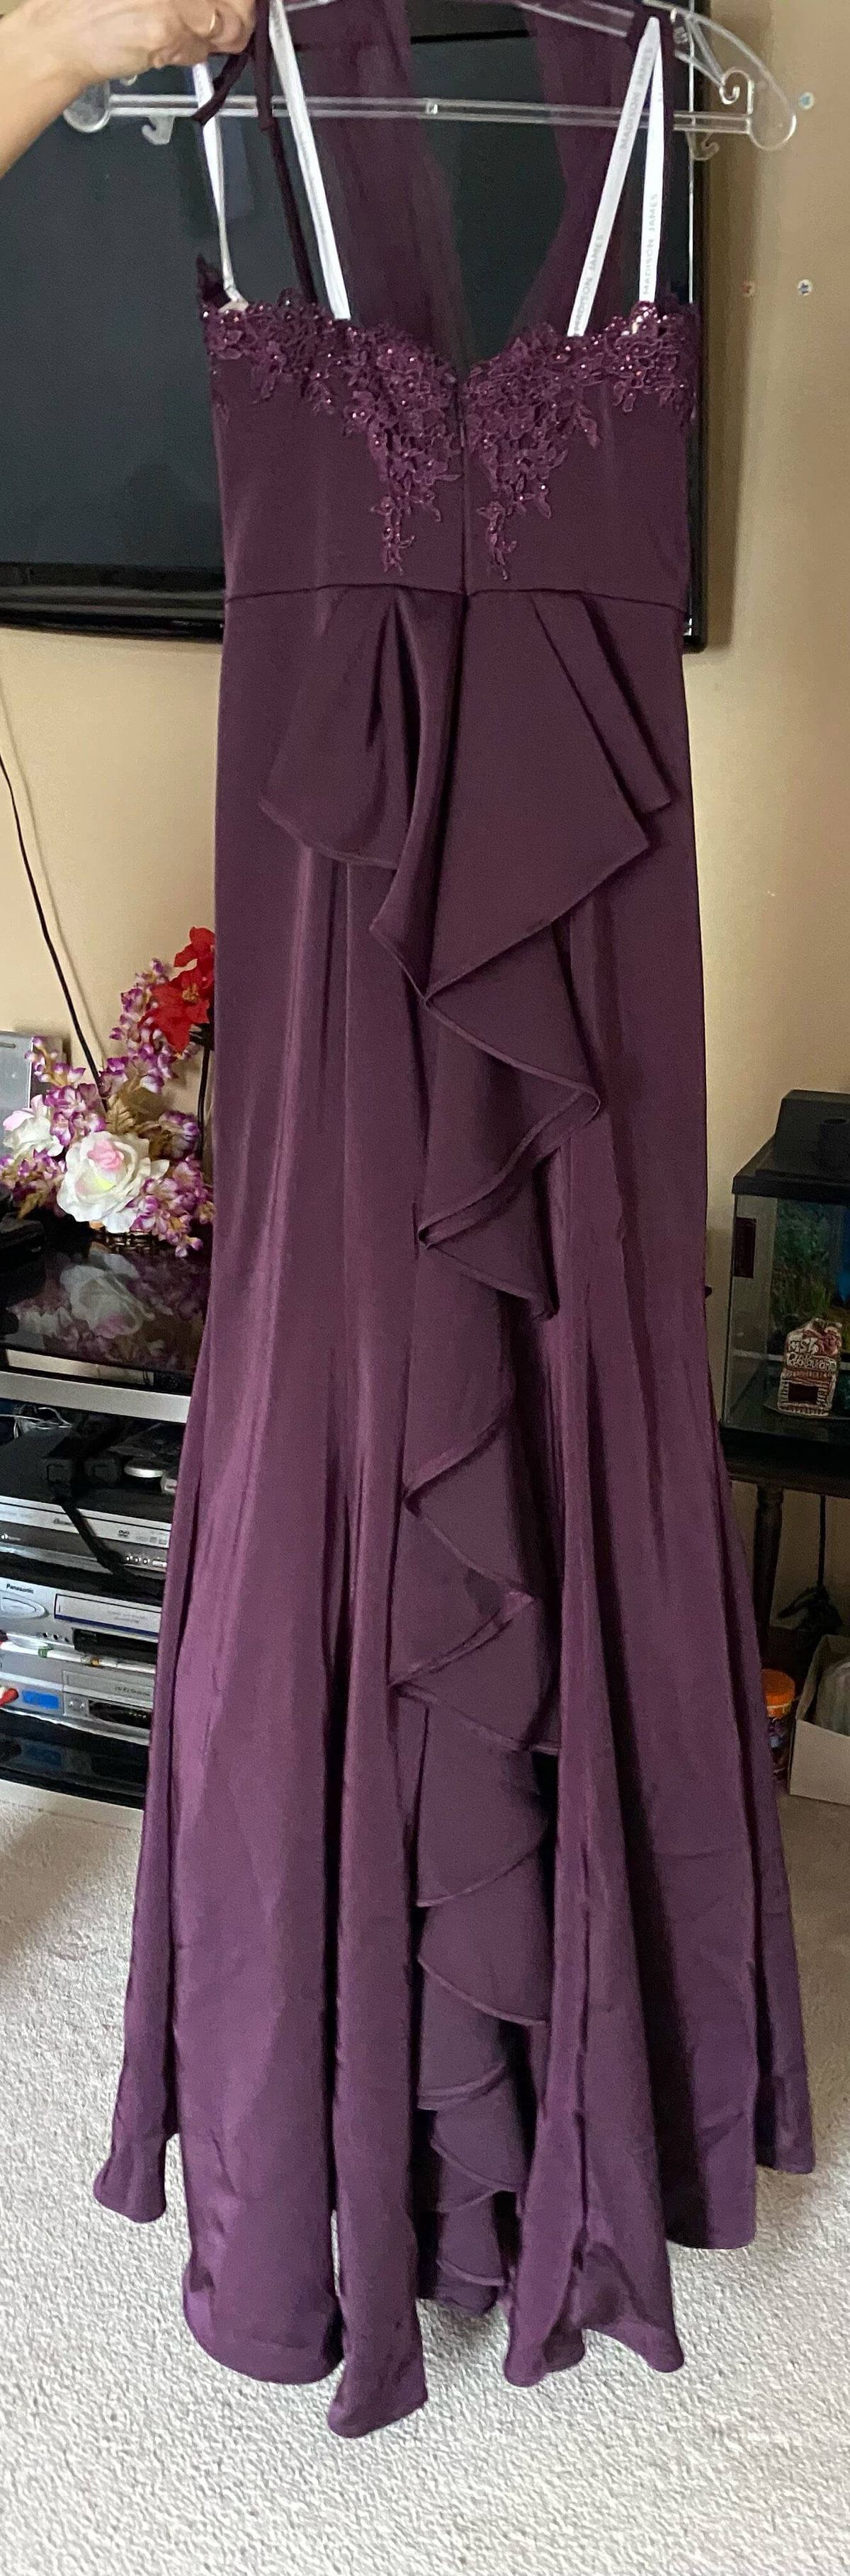 Girls Size 8 Prom Strapless Burgundy Purple Mermaid Dress on Queenly